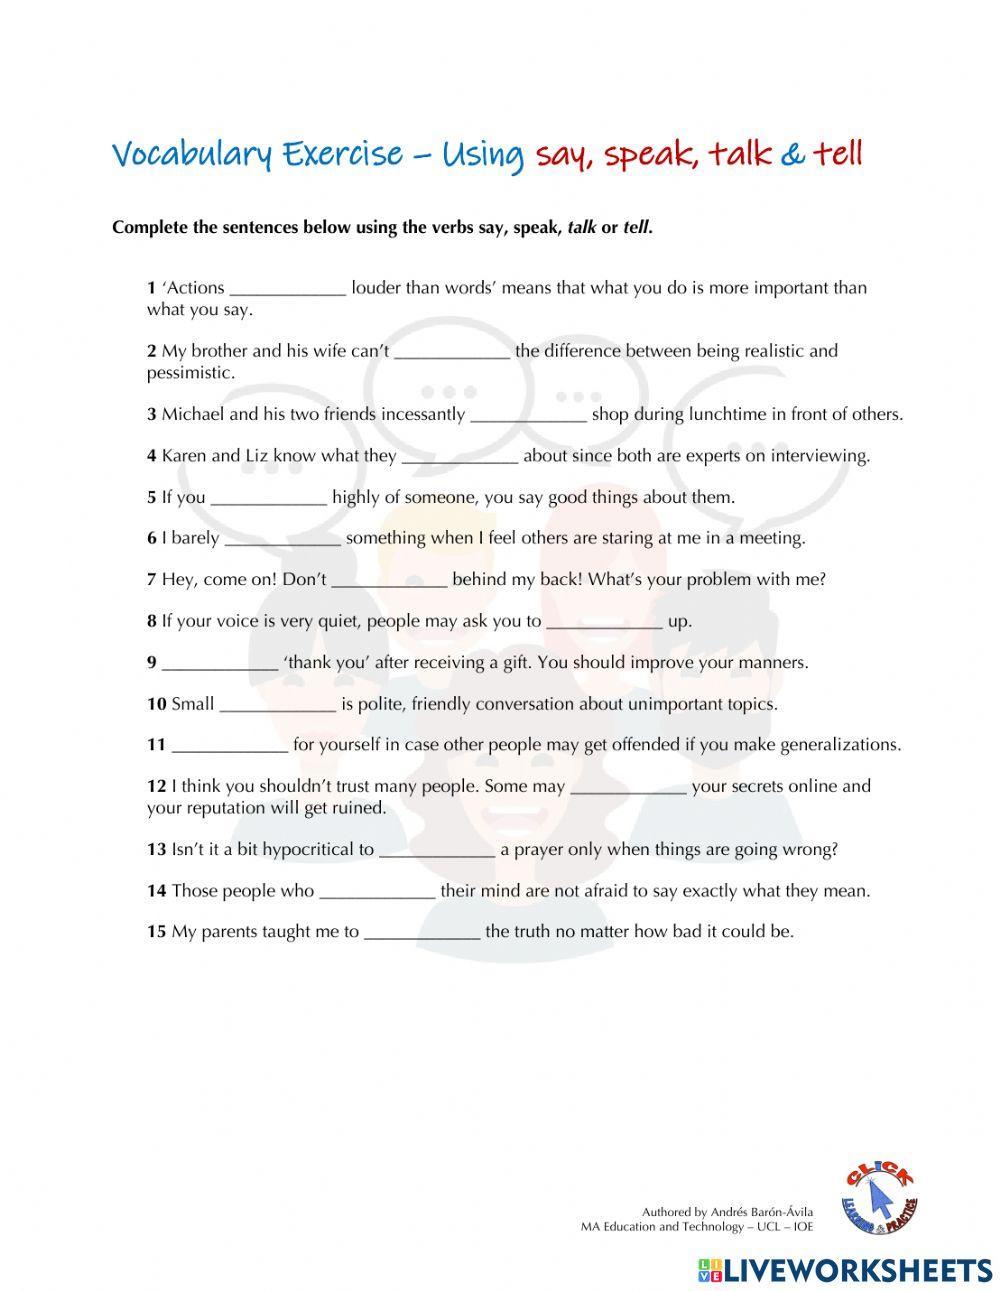 Grammar Ex. - Verbs say-speak-talk-tell worksheet | Live Worksheets